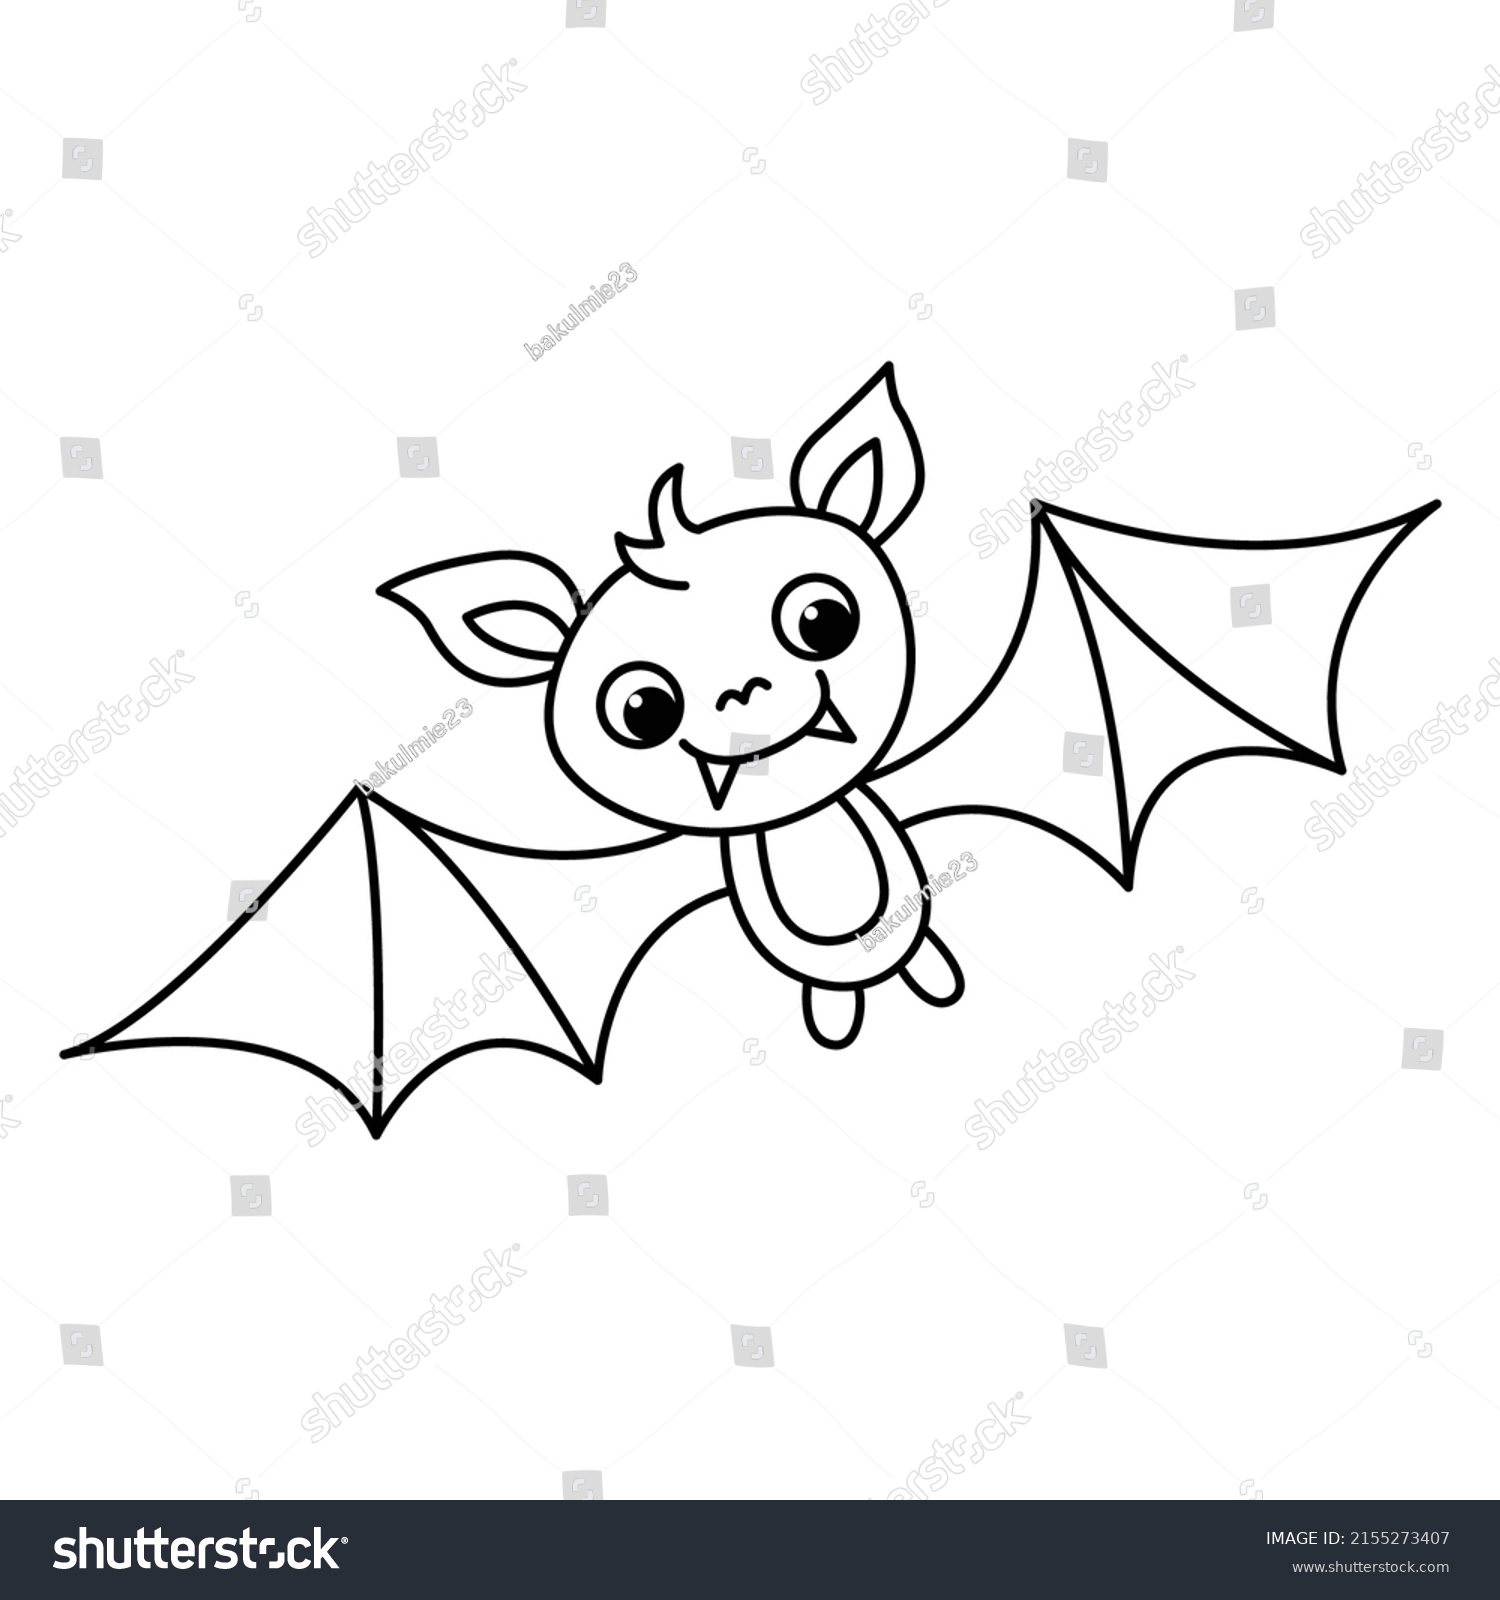 Cute Bat Cartoon Coloring Page Illustration Stock Vector (Royalty Free ...